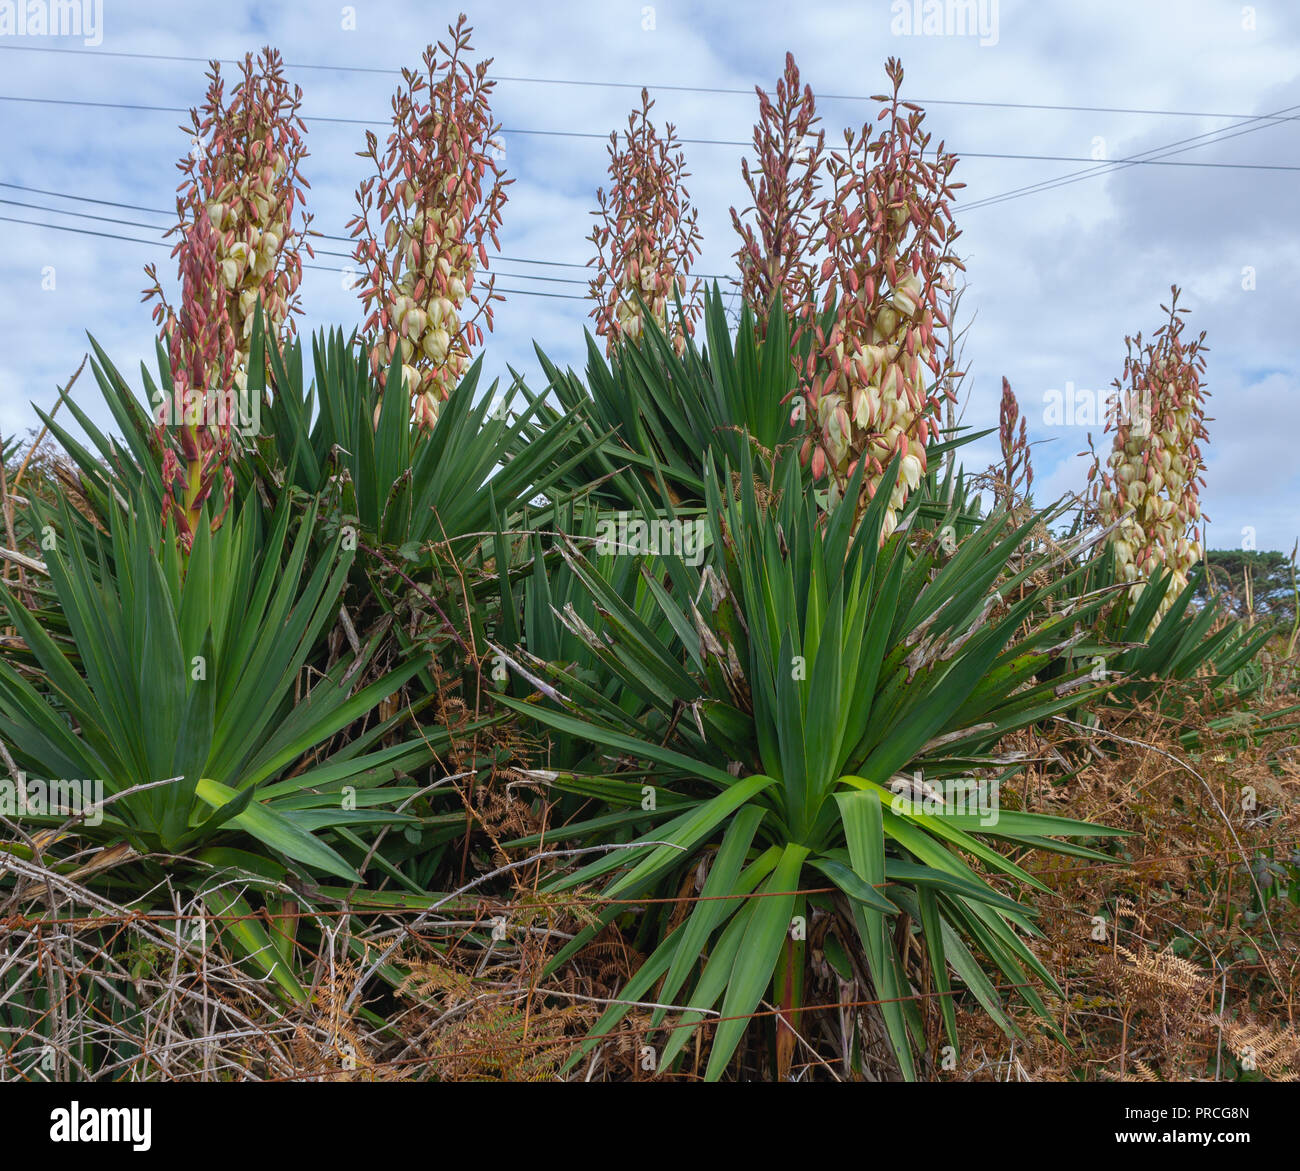 yucca gloriosa yucca plant flowering growing amongst ferns in West Cork Ireland. Stock Photo